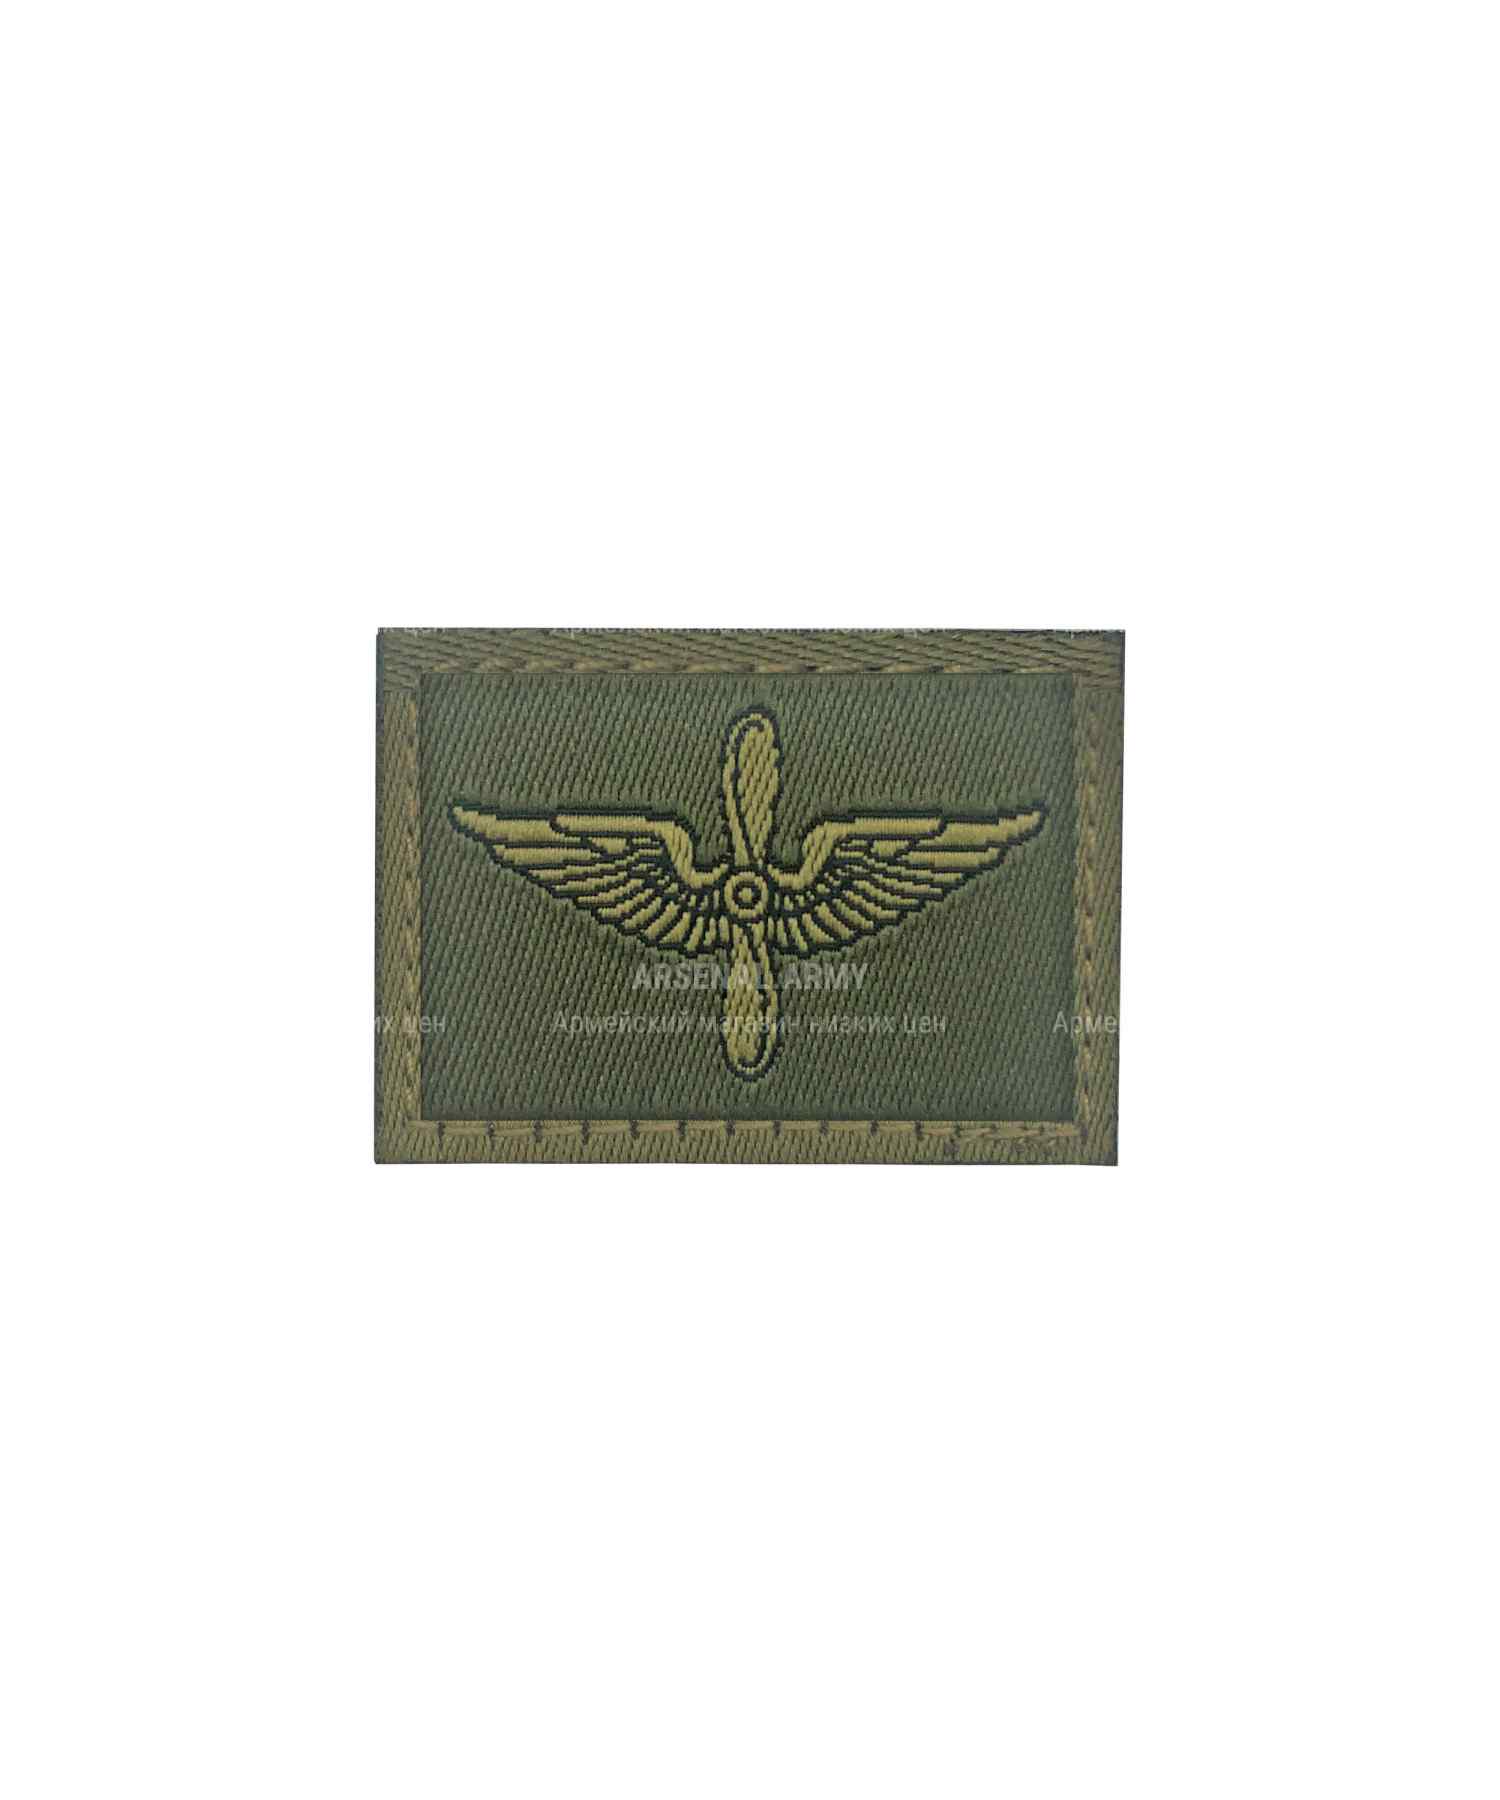 Эмблема ВВС на липе зеленая